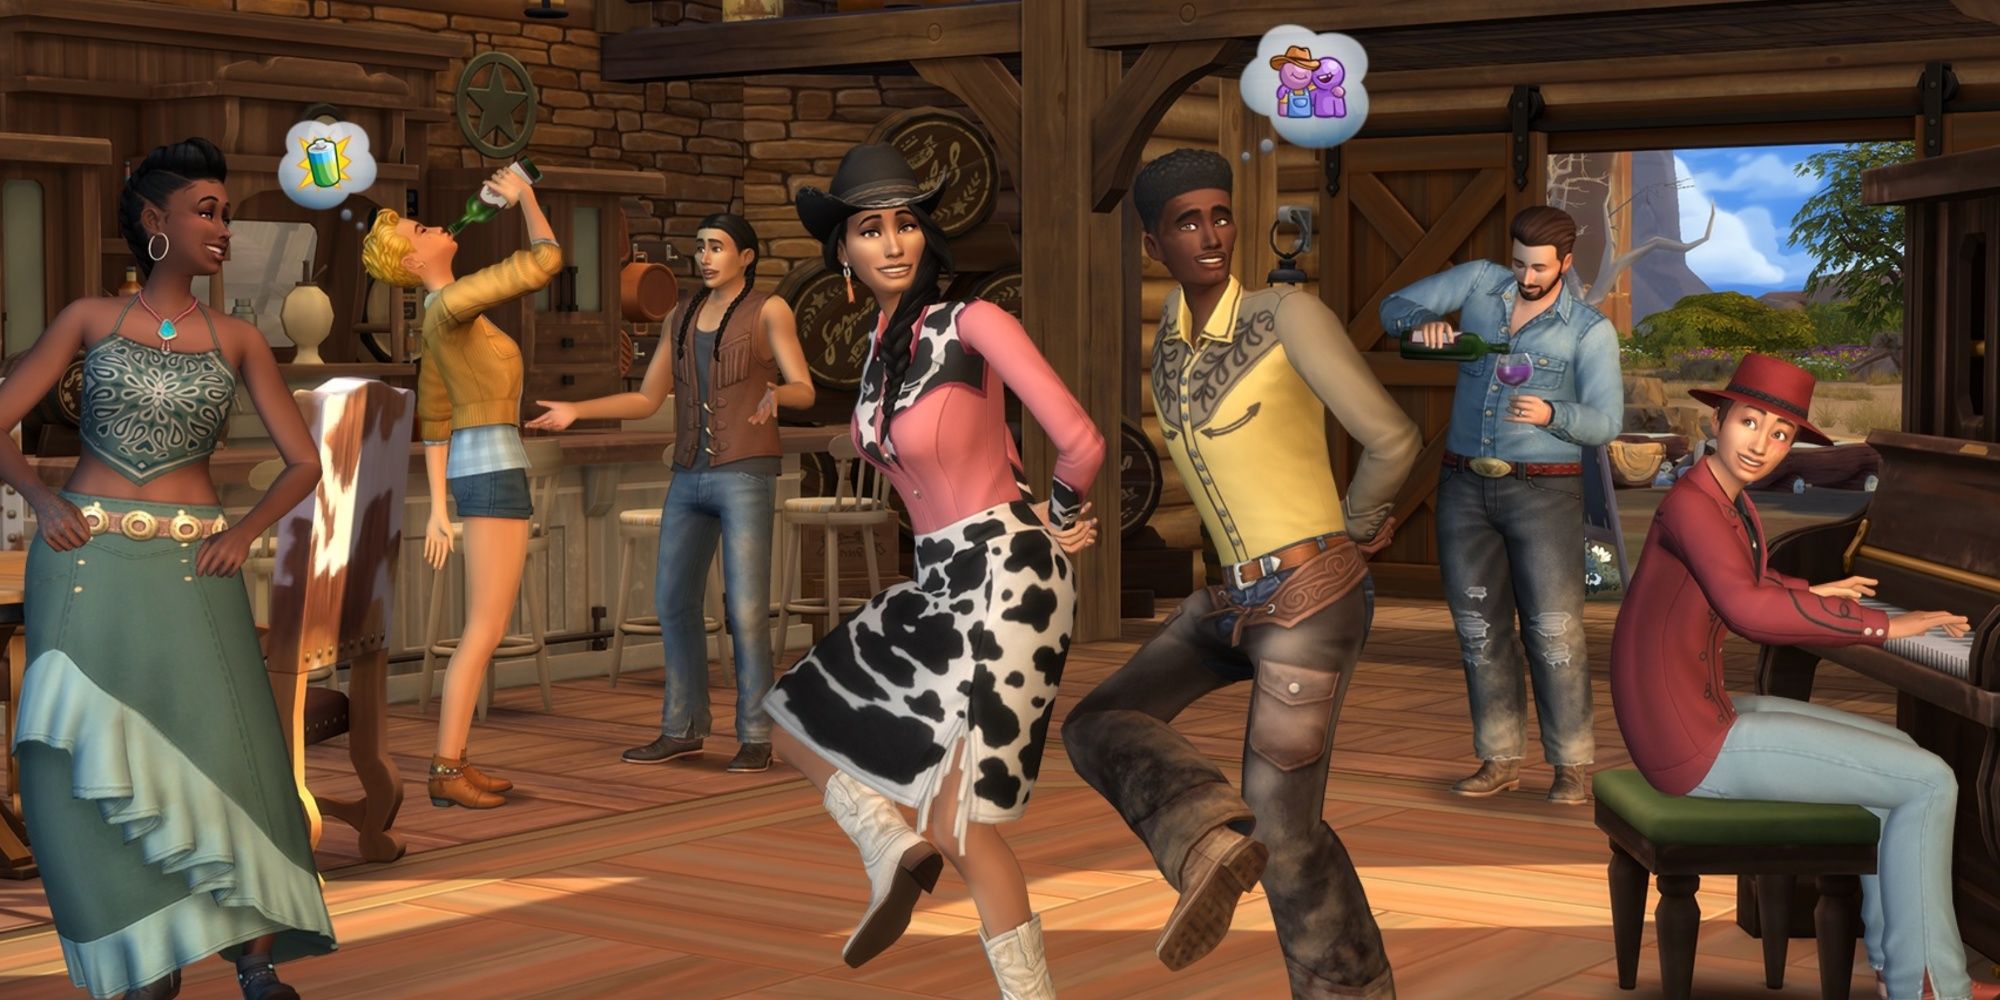 sims line dancing in tavern